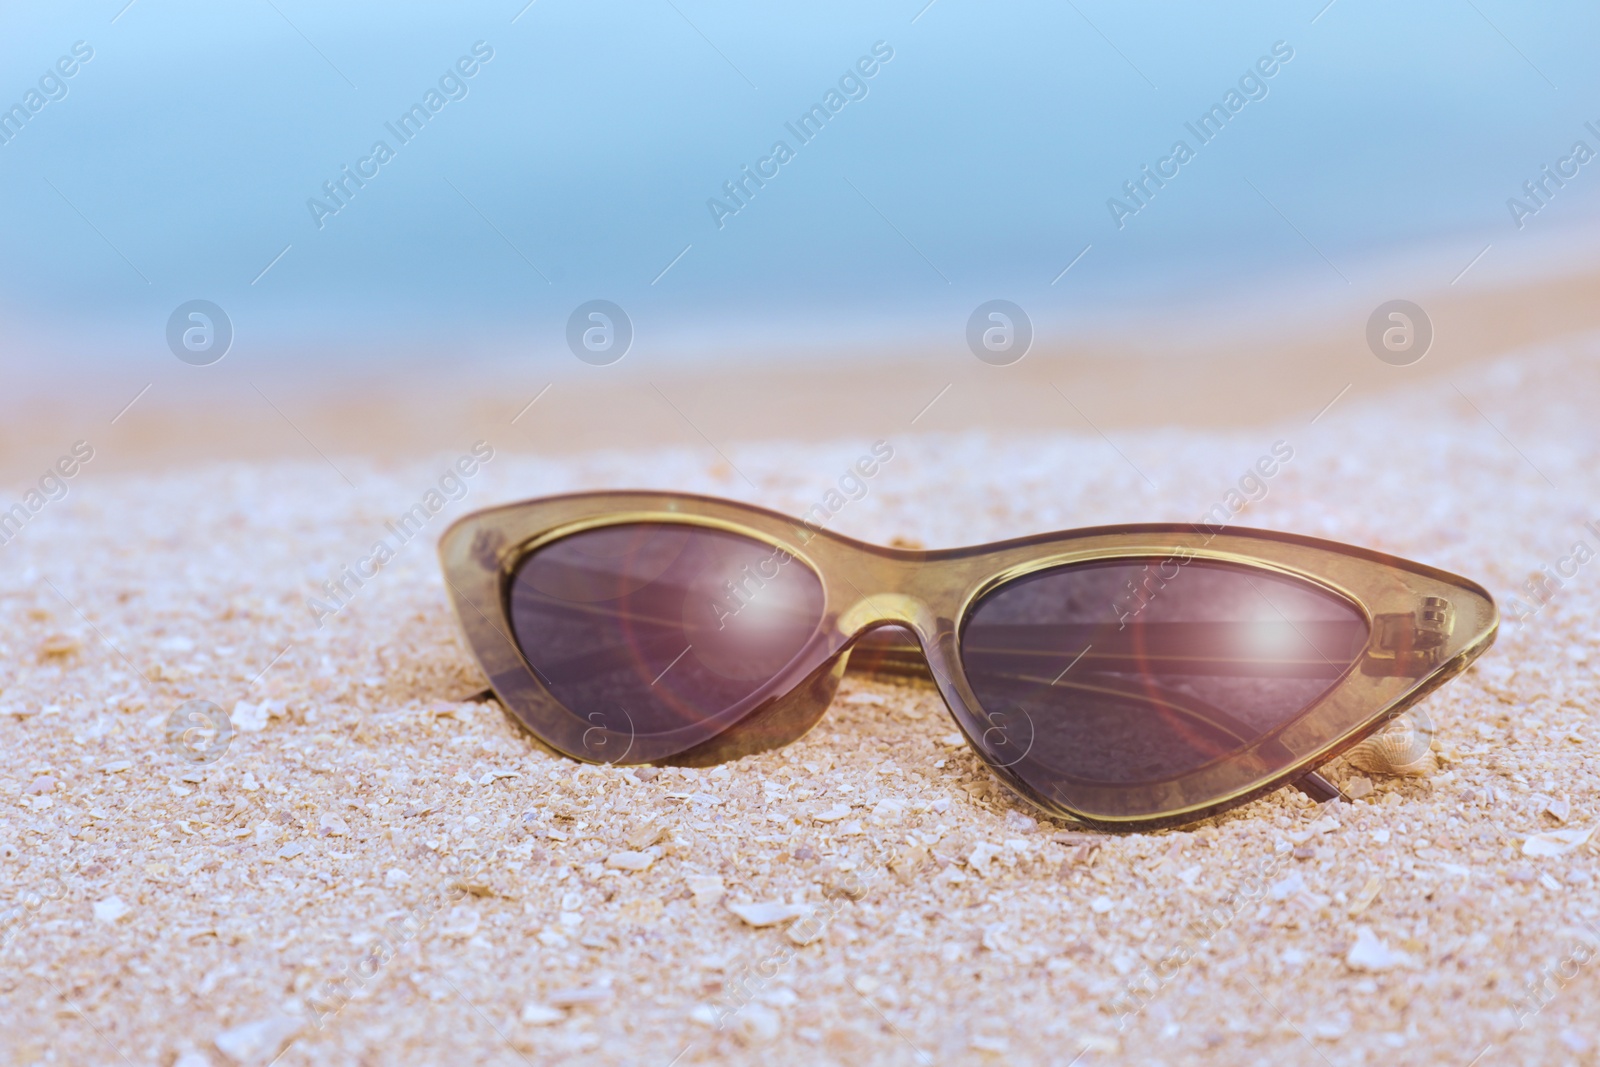 Photo of Stylish sunglasses on sandy beach near sea